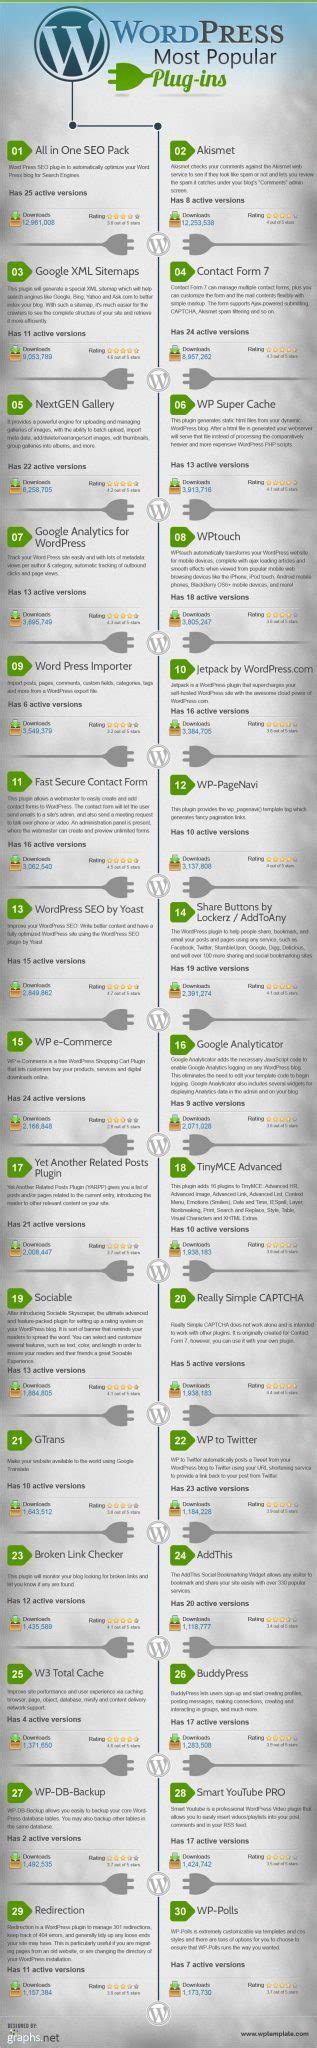 The Top 30 Most Popular Wordpress Plugins Infographic Wpwebhost